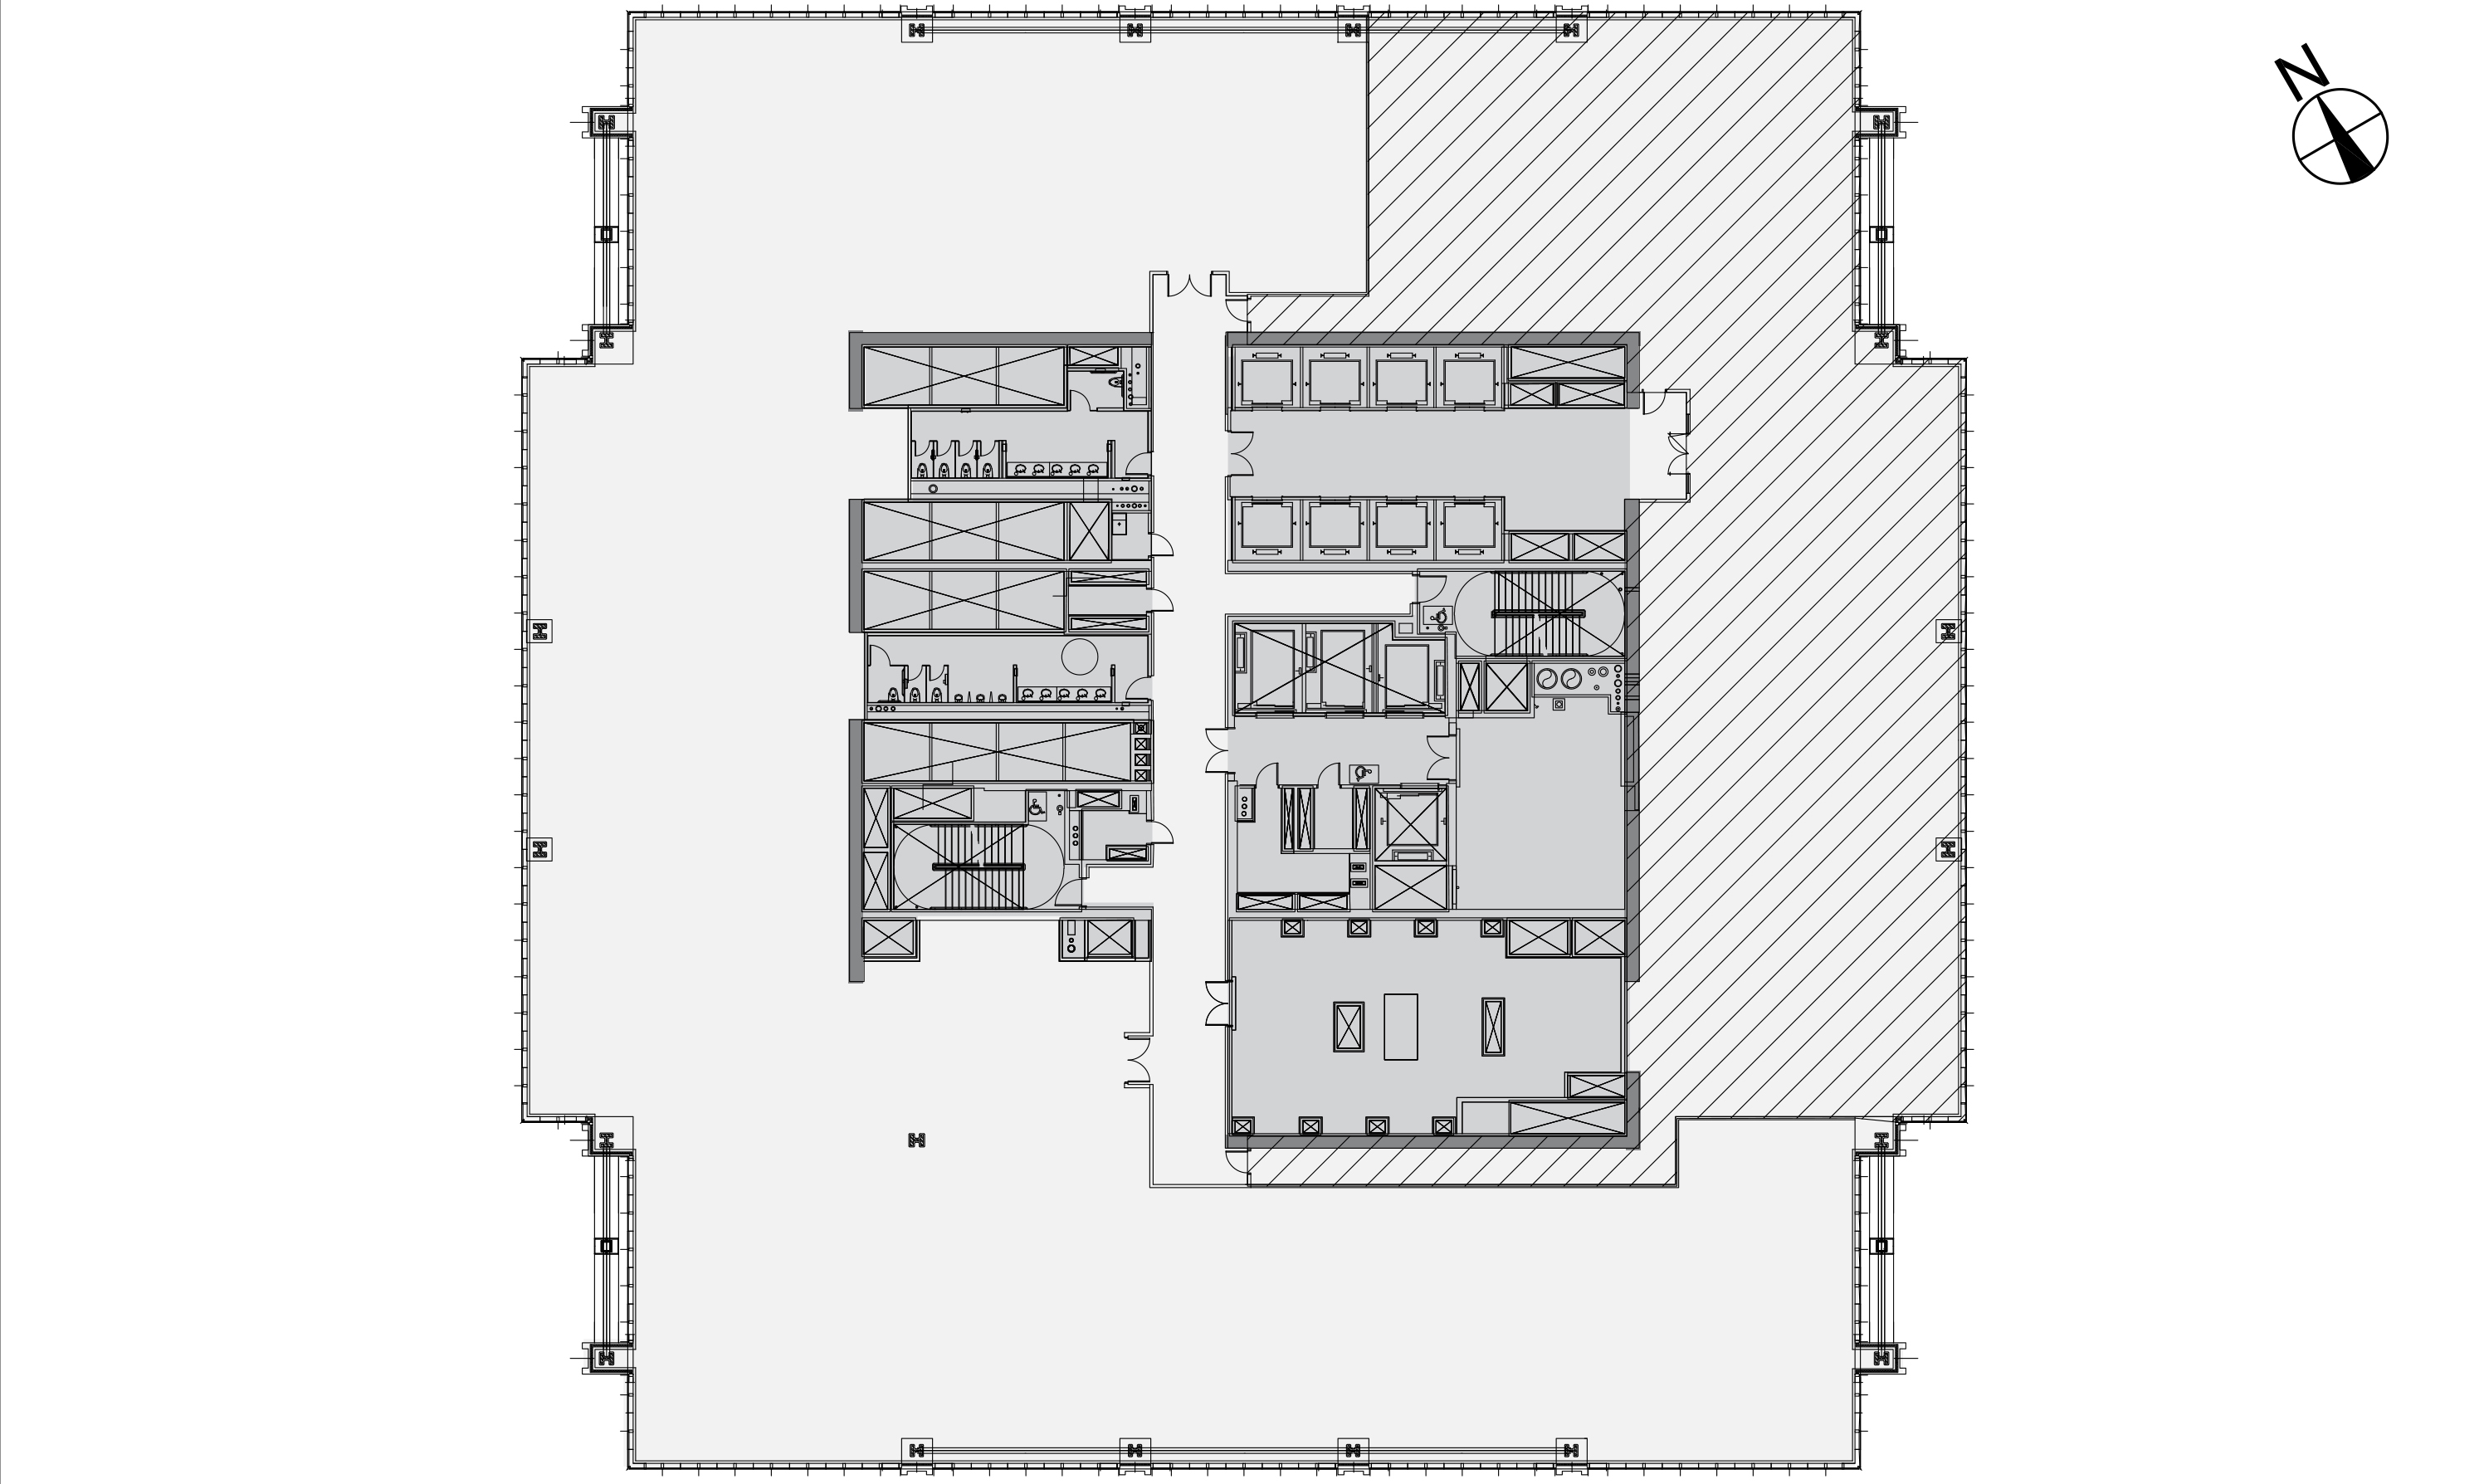 CORE & SHELL Floorplan